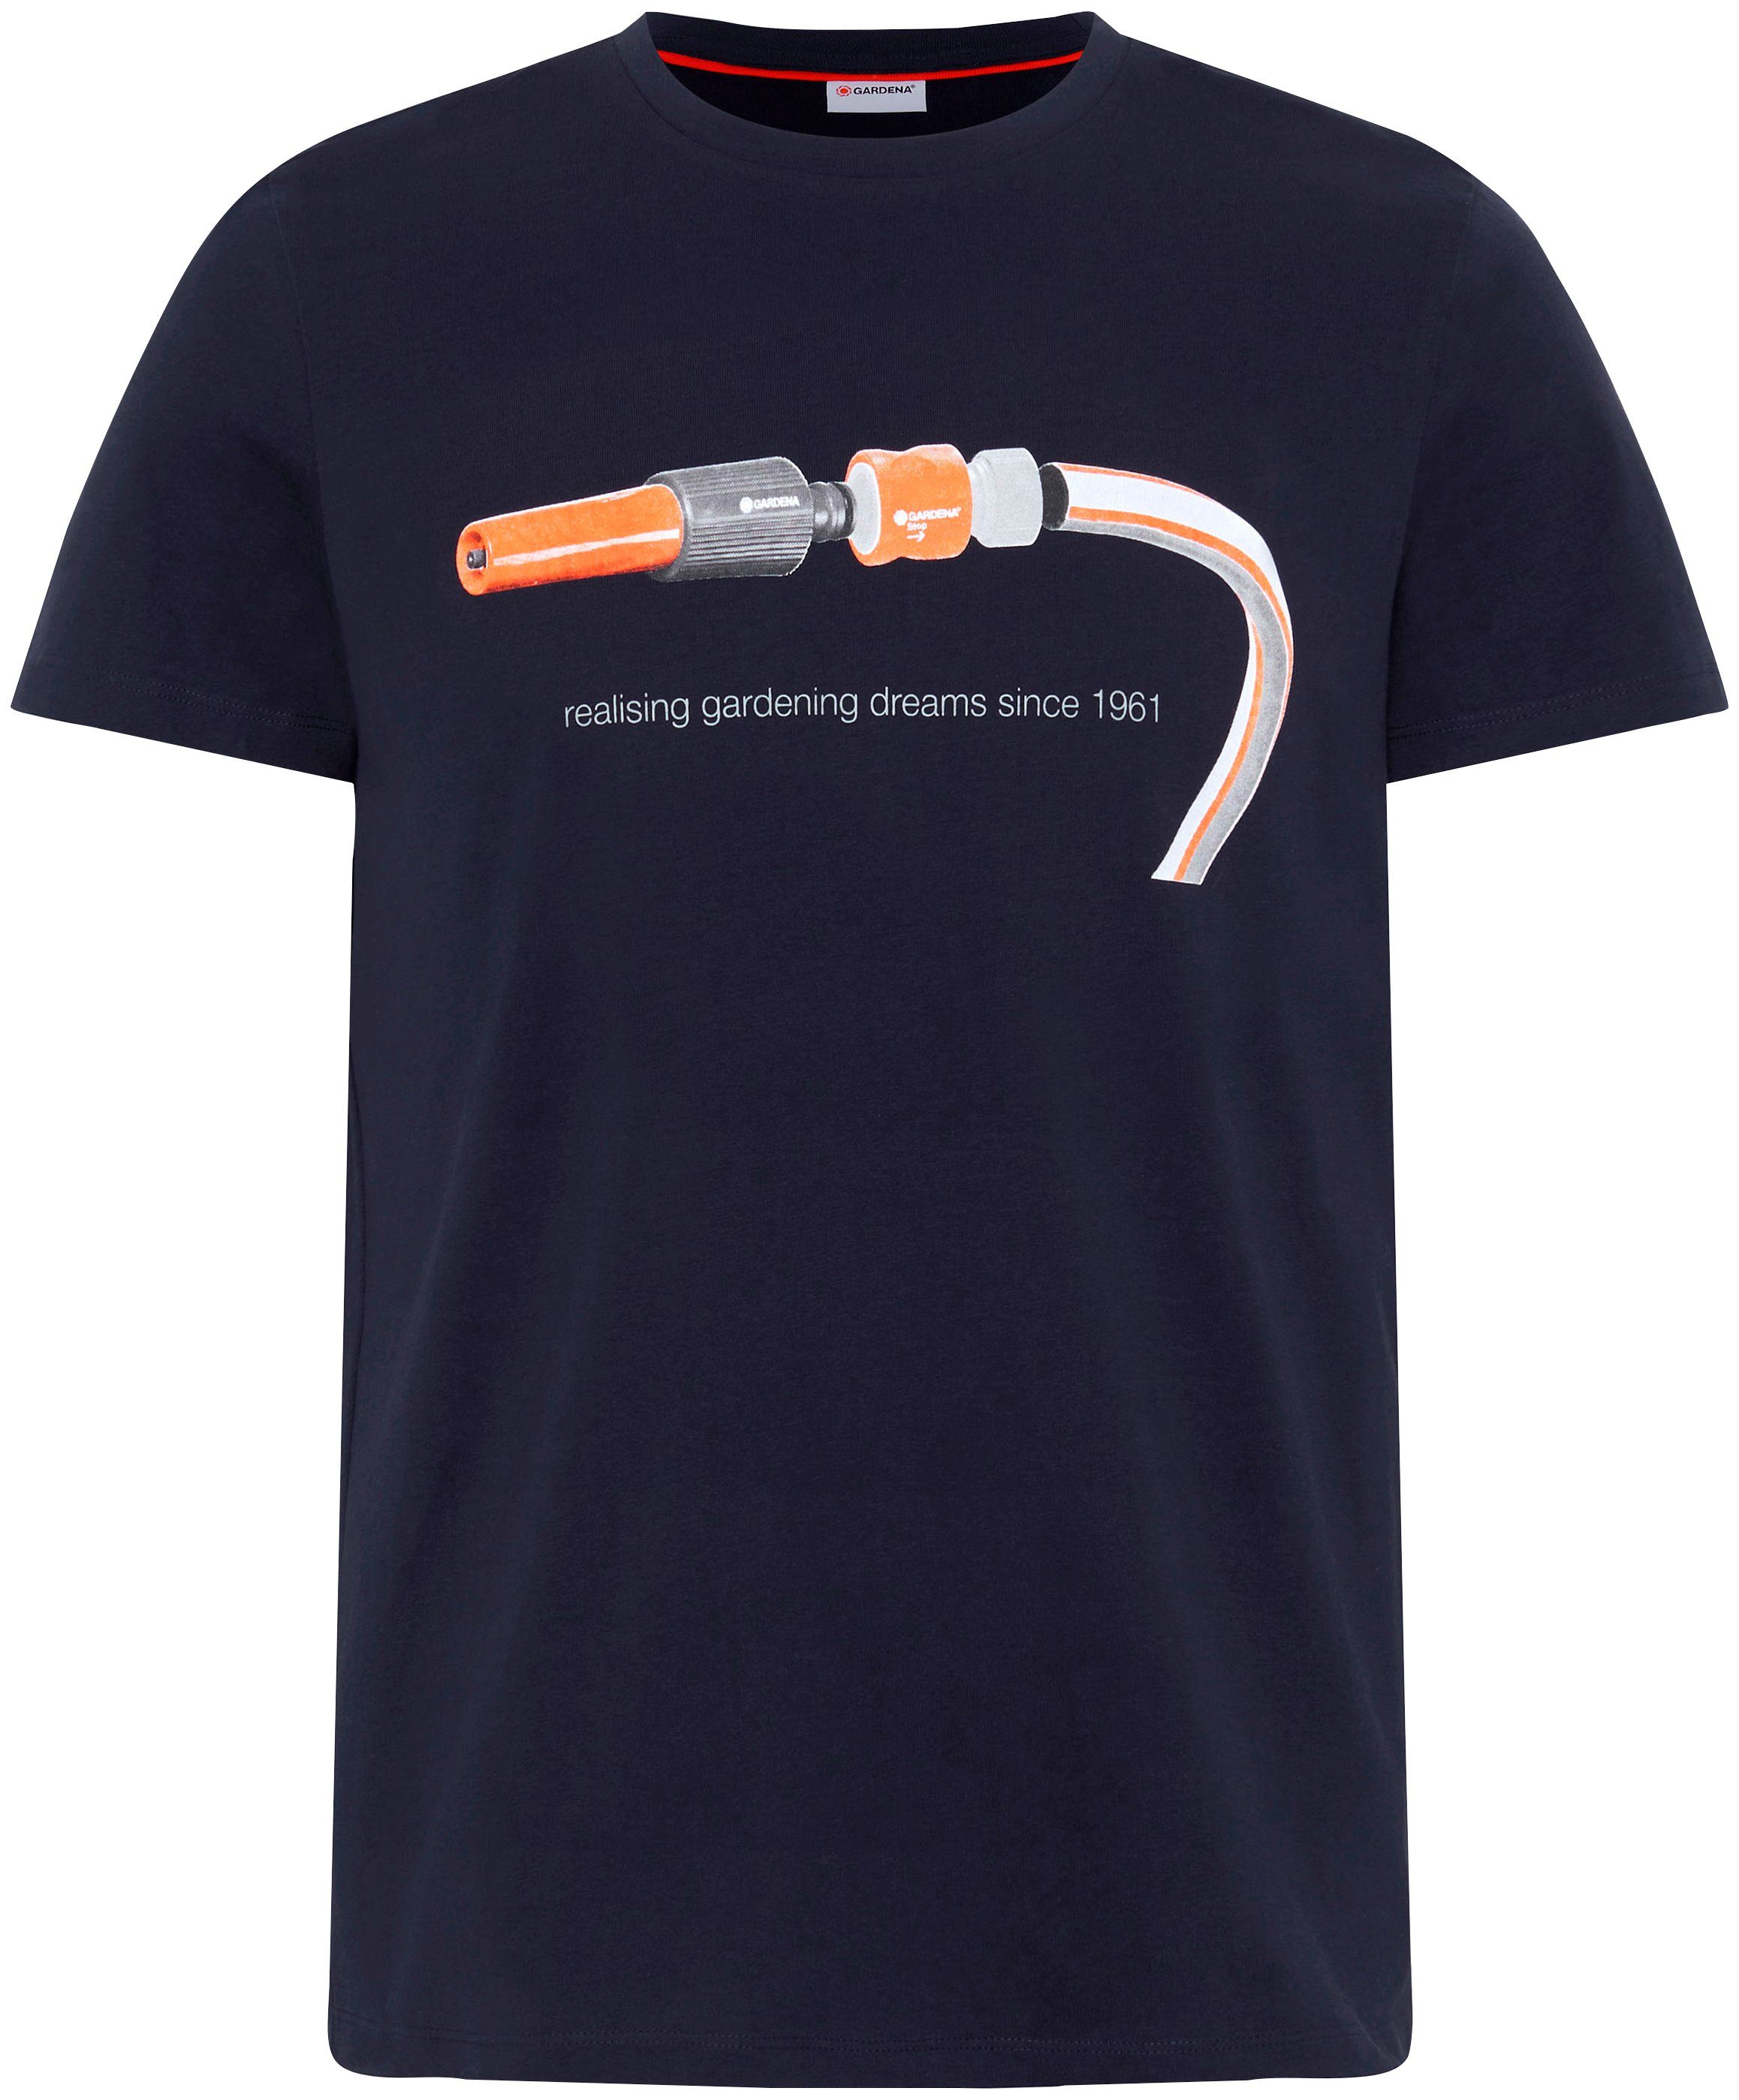 GARDENA T-Shirt Night Sky mit Gardena-Logodruck